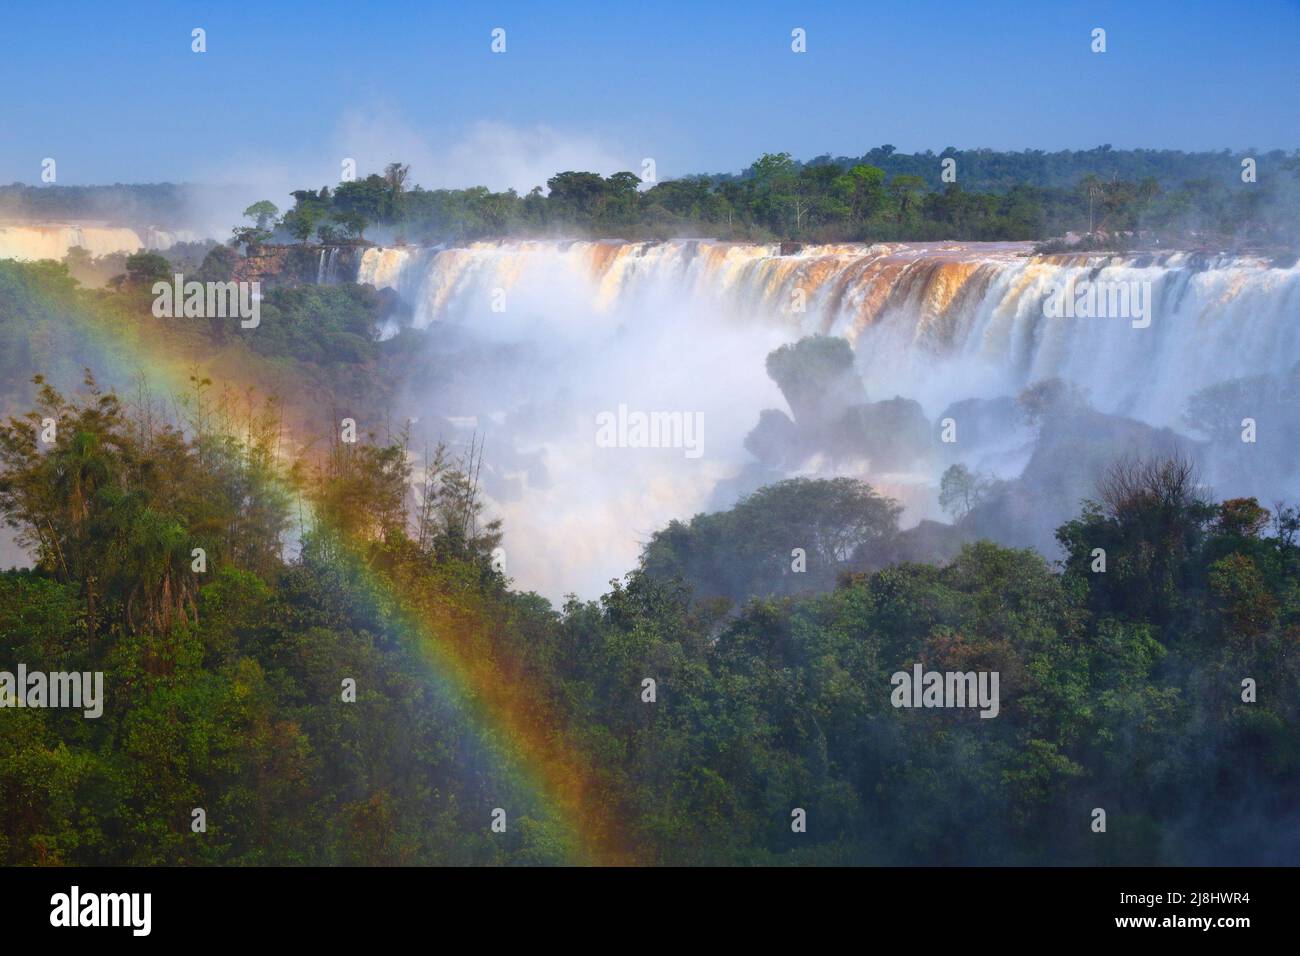 Iguazu Falls landscape and rainbow - natural wonder in Argentina. Stock Photo